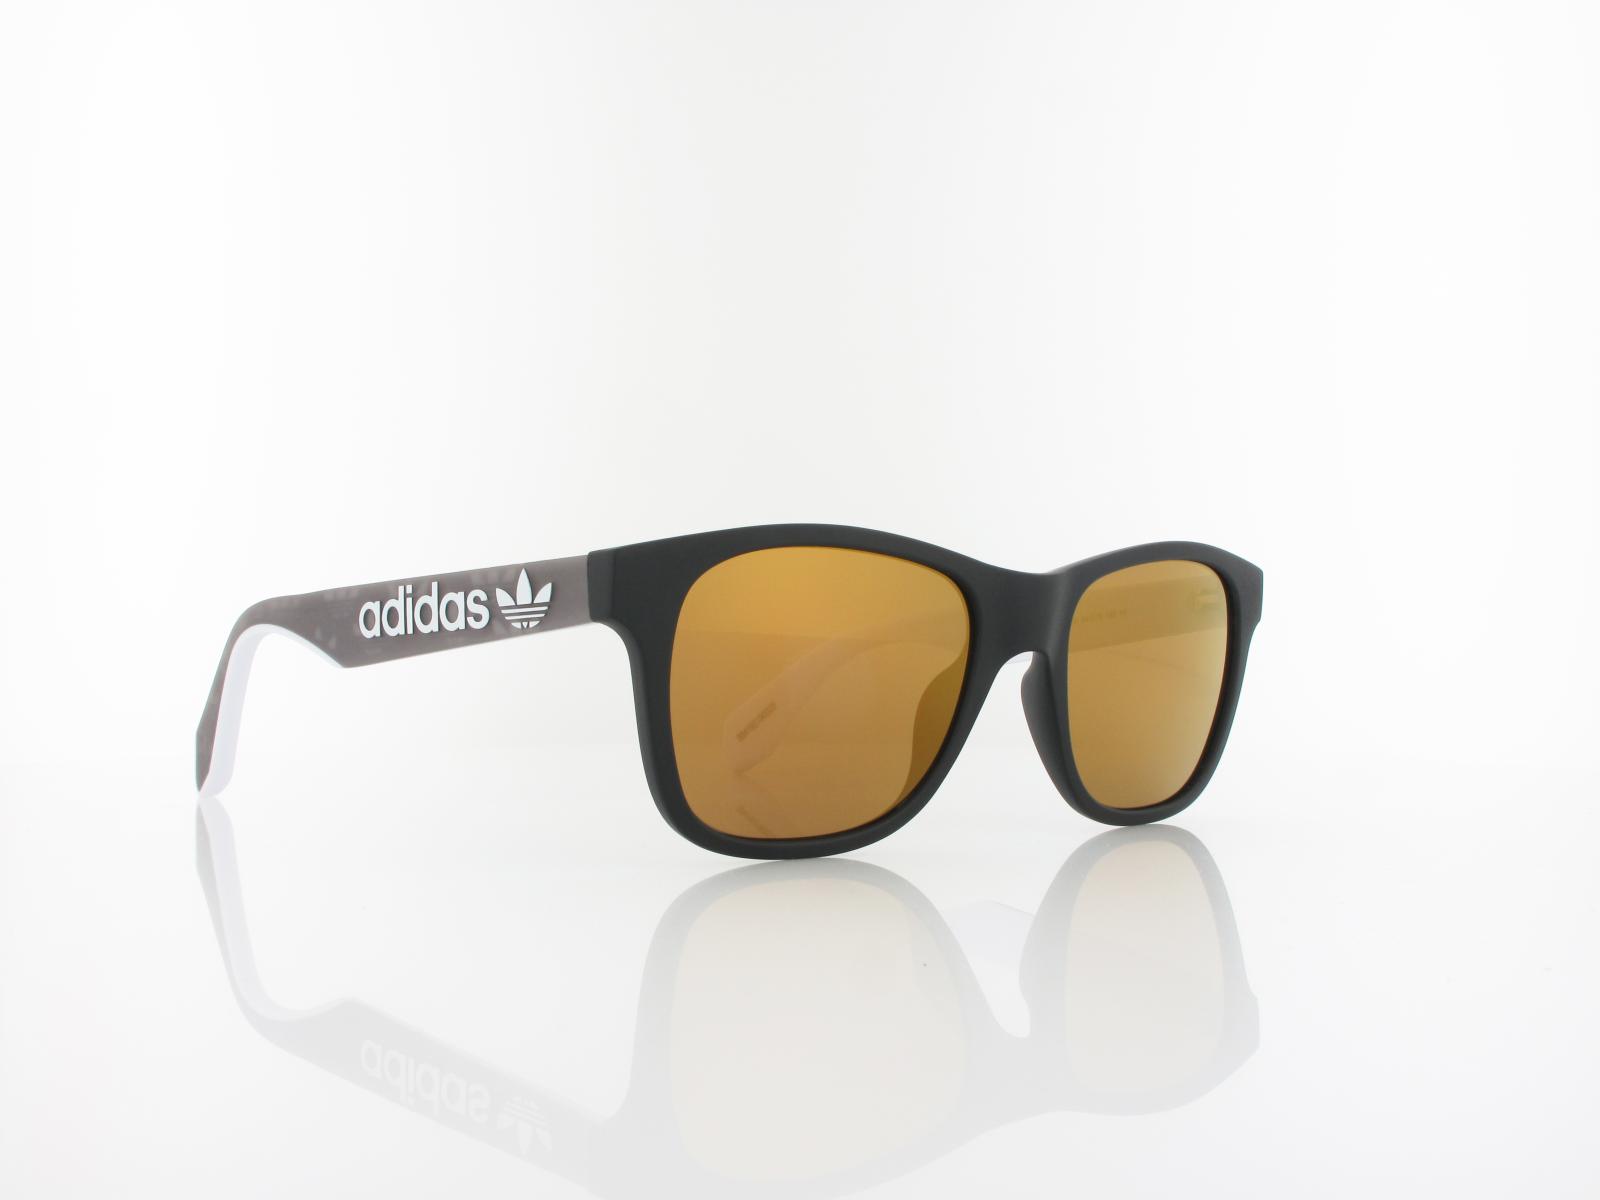 Adidas | OR0060 02G 54 | matte black / brown mirror